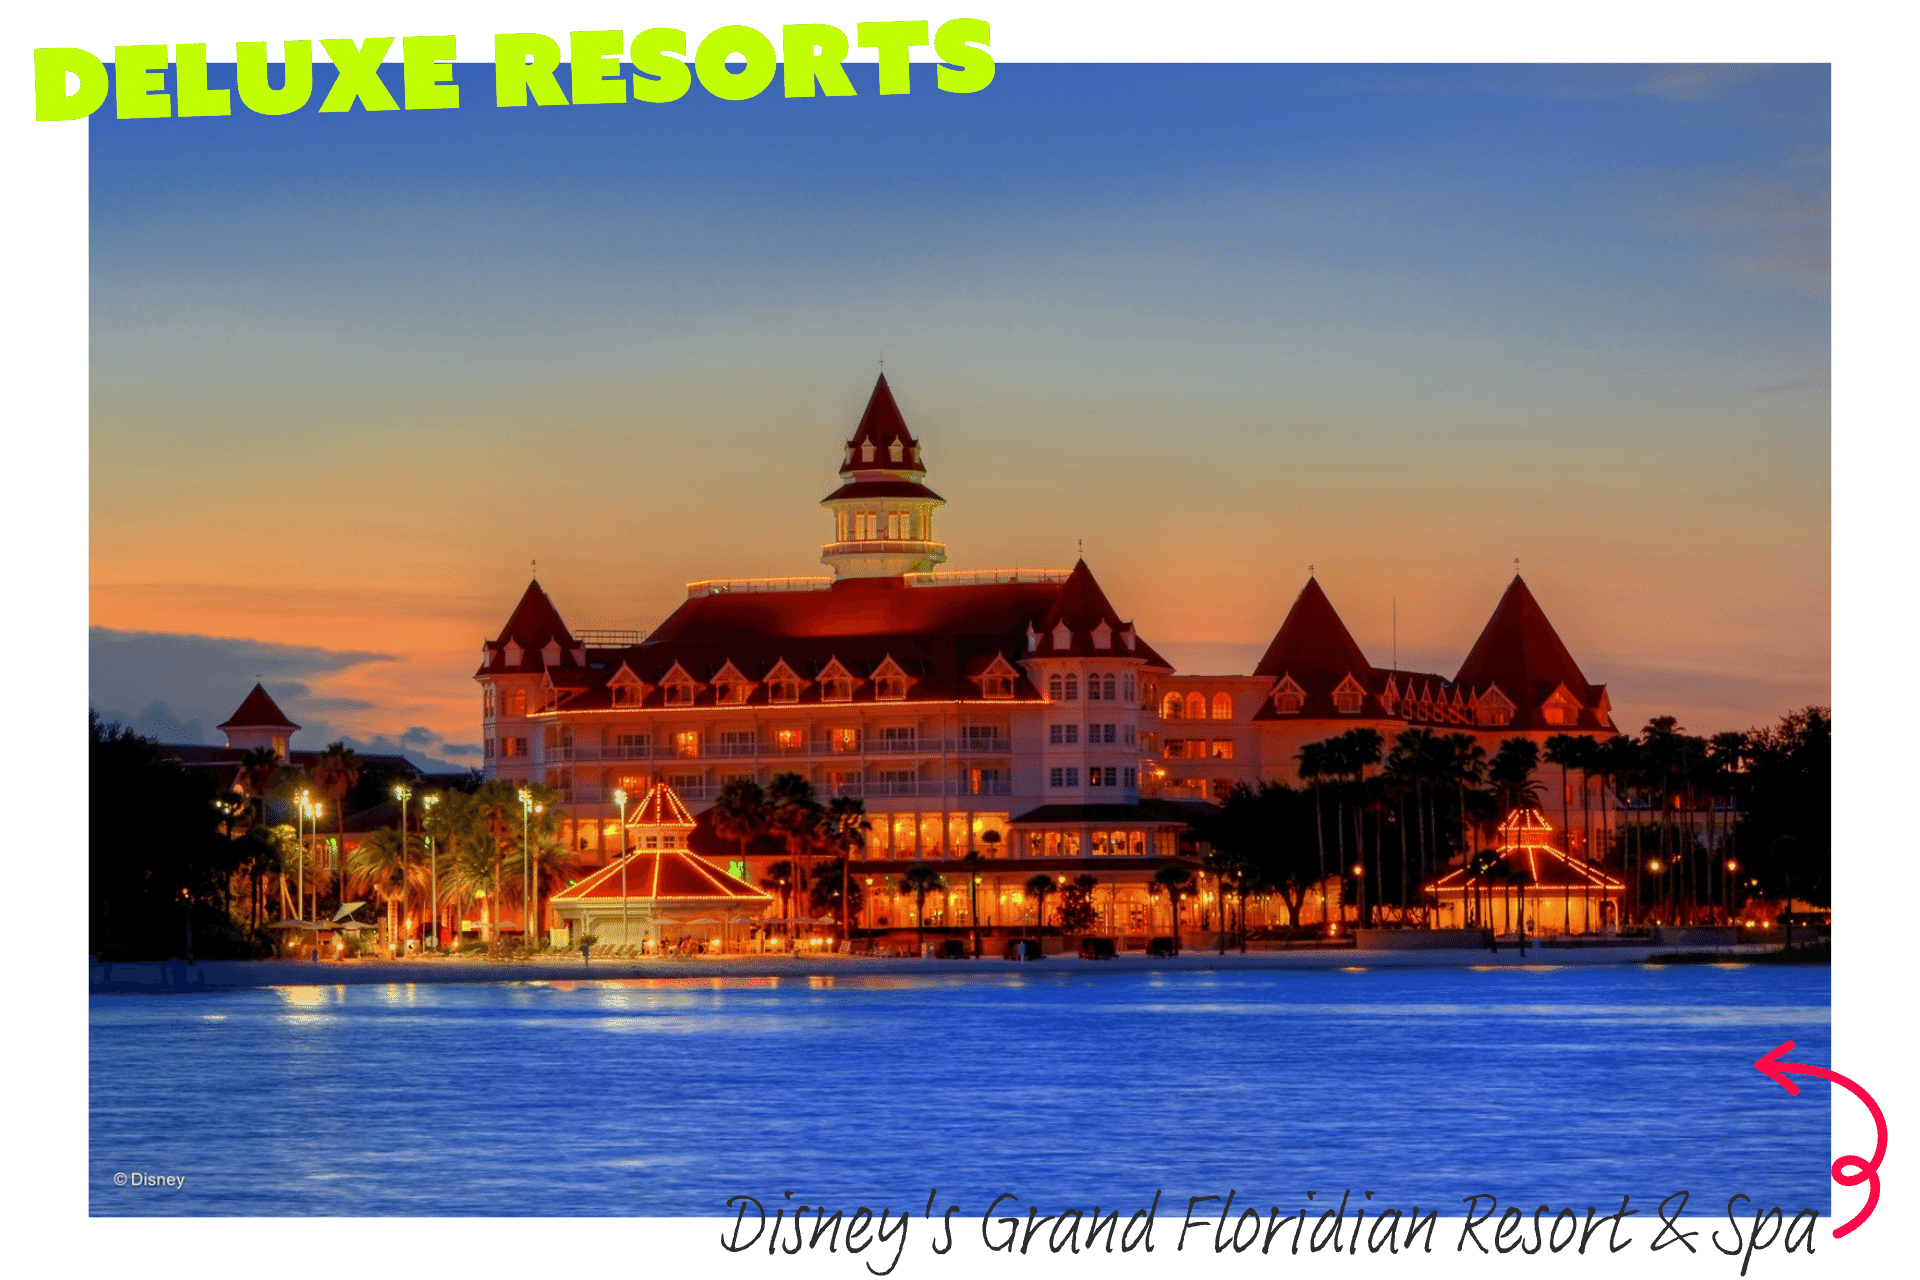 Disney's Grand Floridian Resort & Spa at sunset.